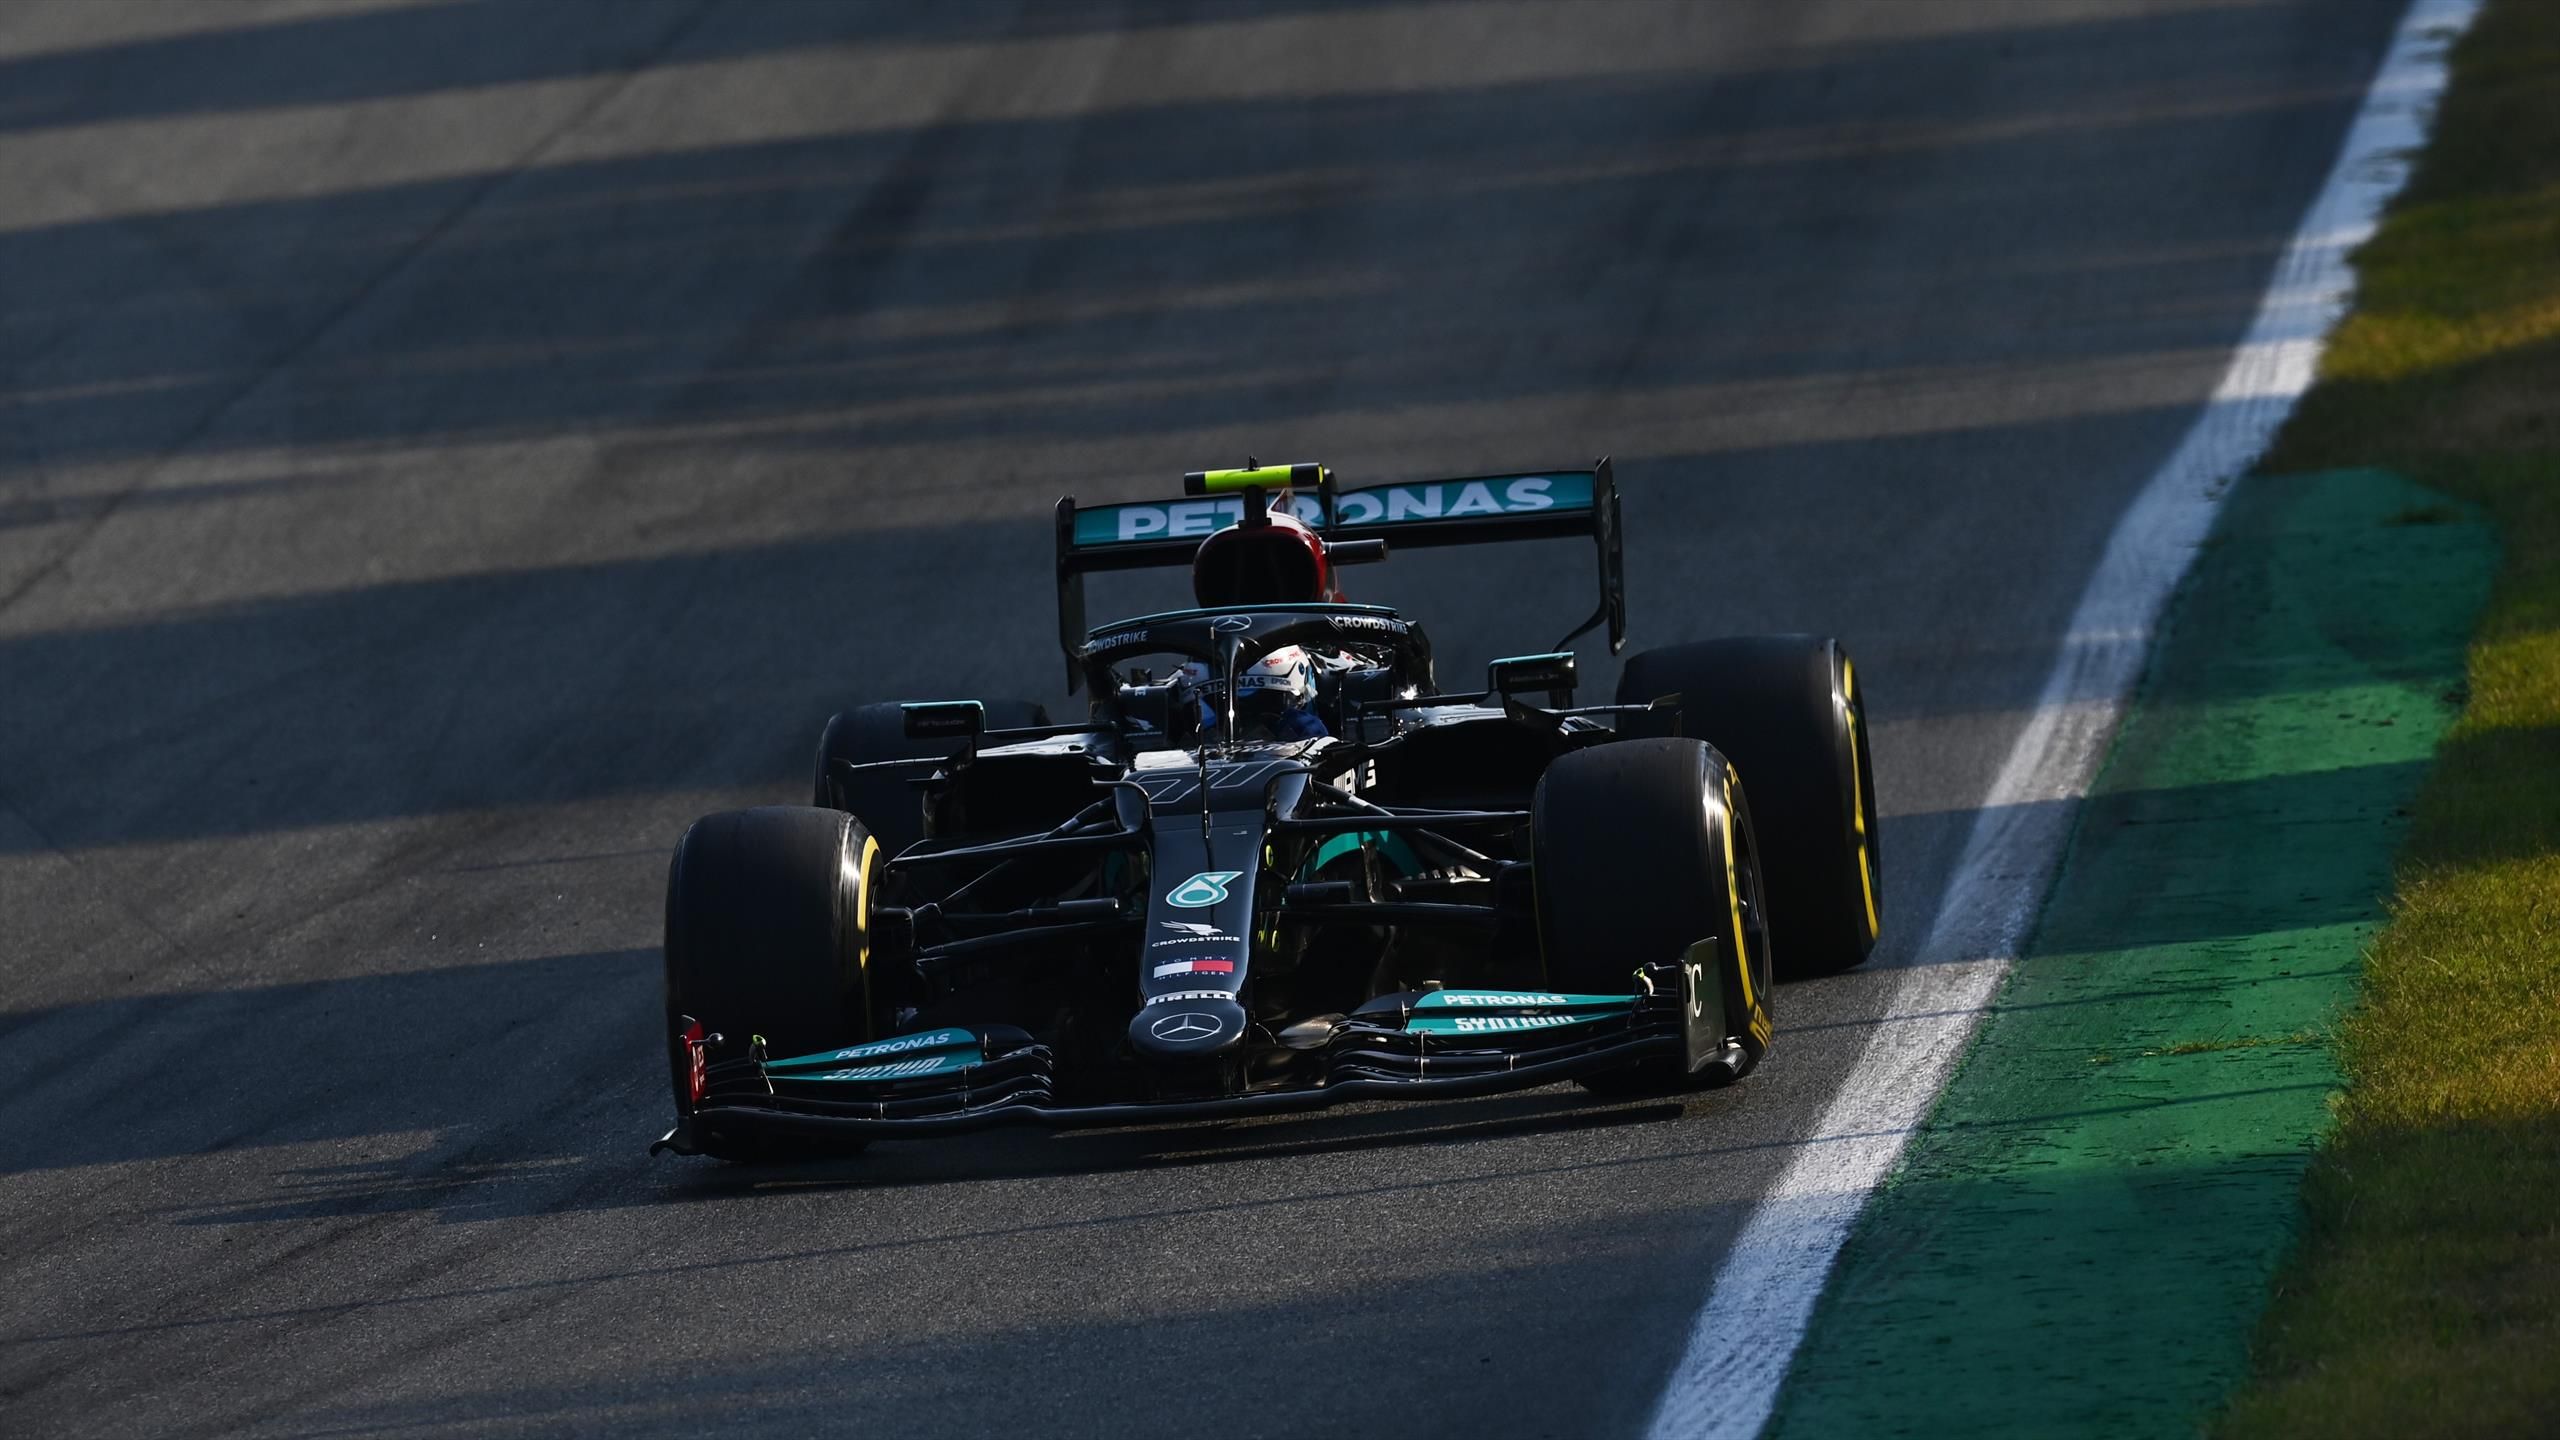 Italian Grand Prix 2021 - Valtteri Bottas wins sprint race at Monza as Lewis Hamilton blows start